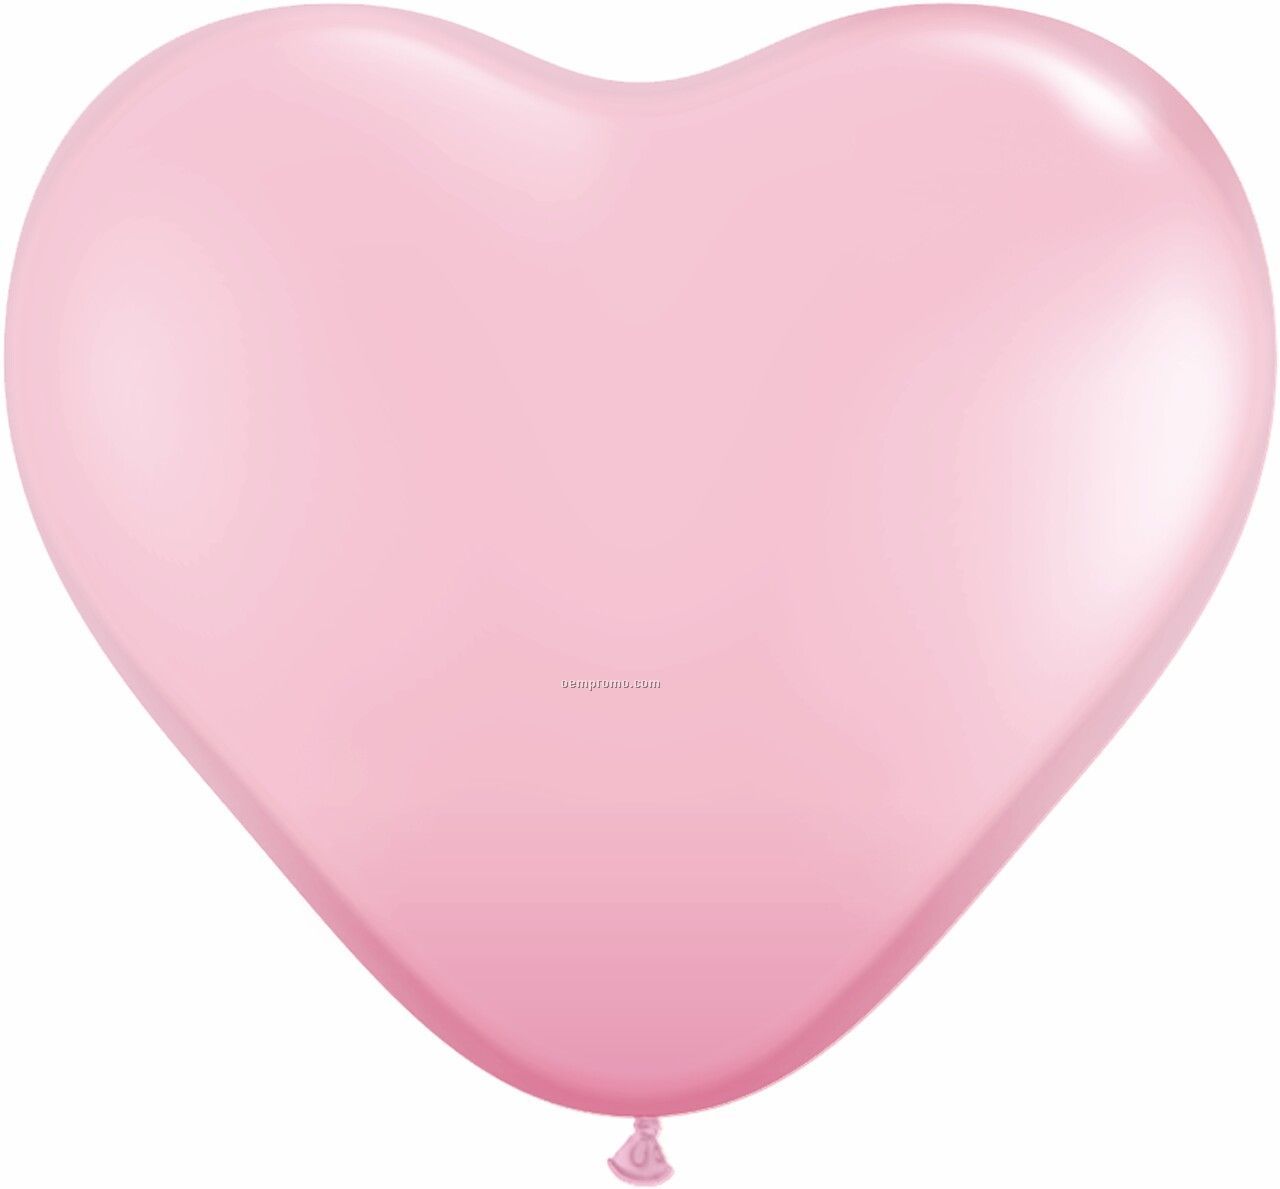 36" Giant Heart Balloon - Standard Colors - Blank